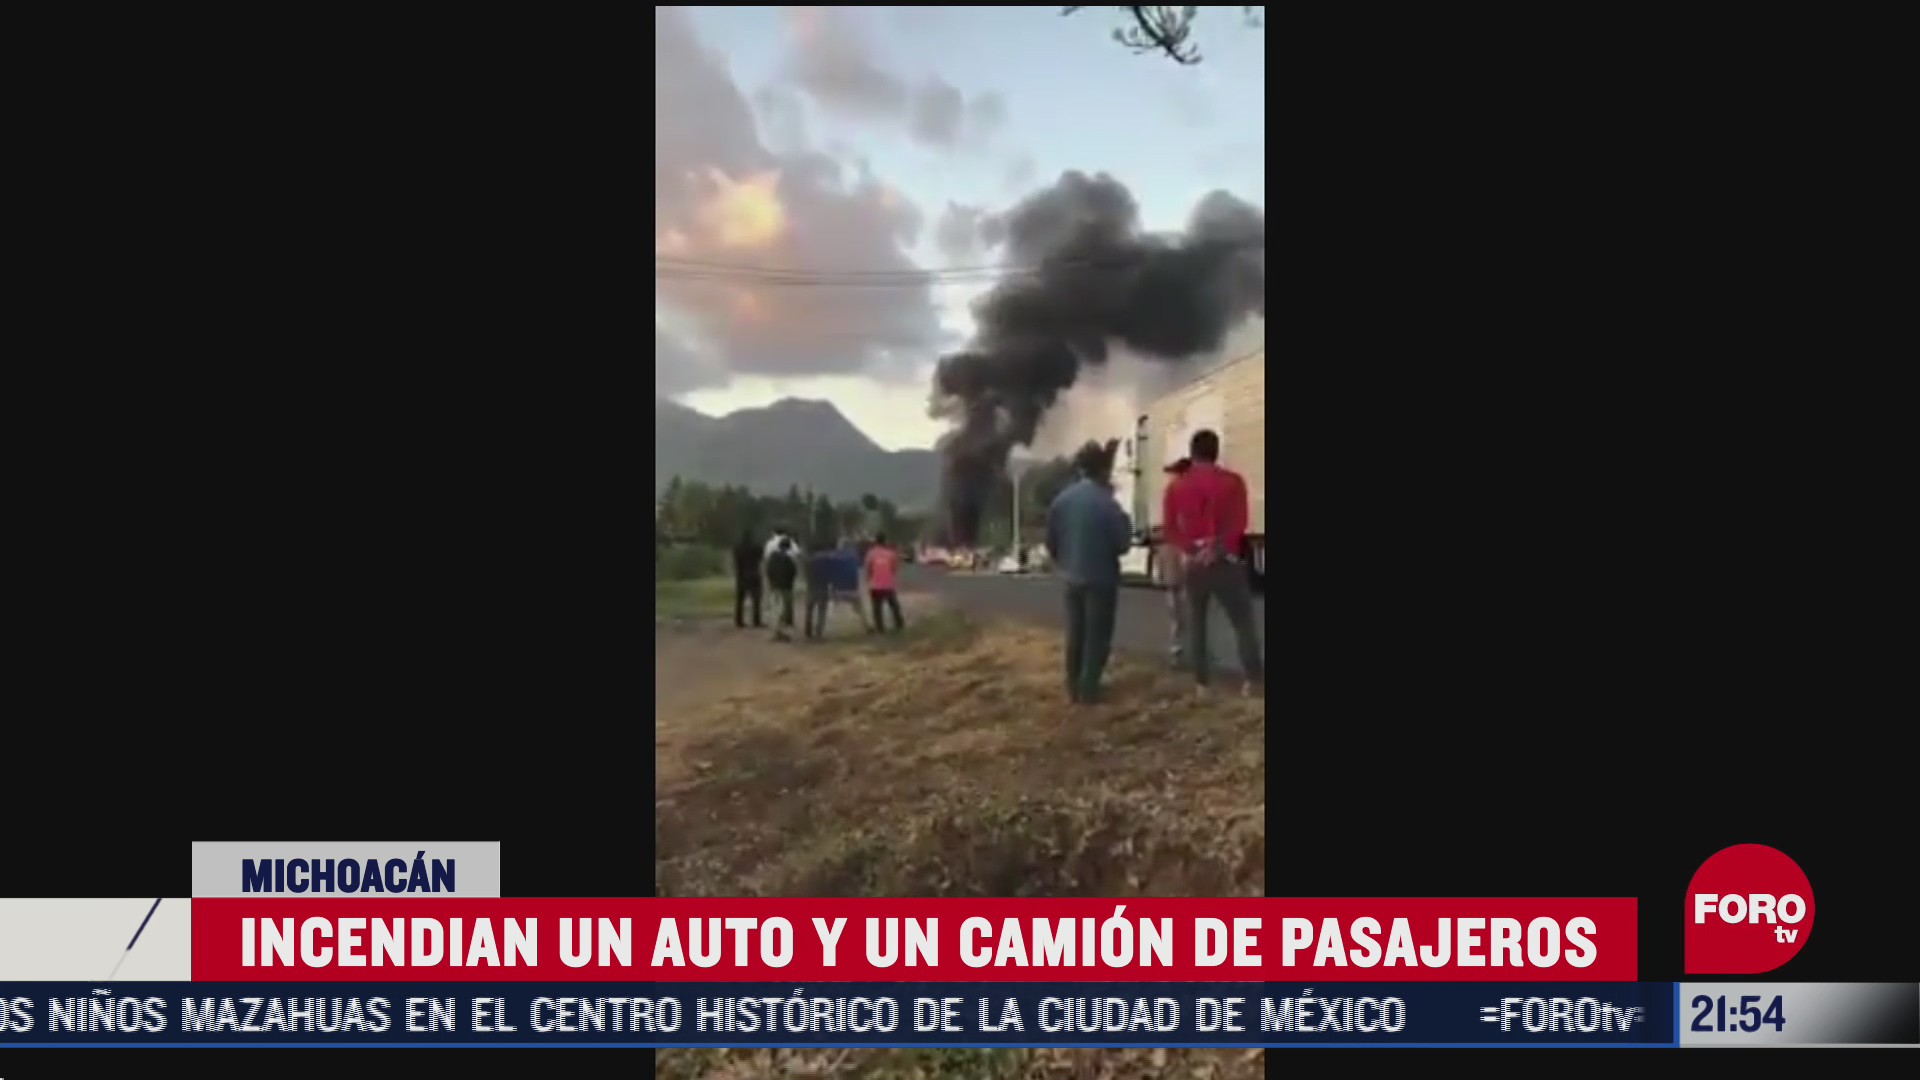 sicarios incendian camion de pasajeros en michoacan